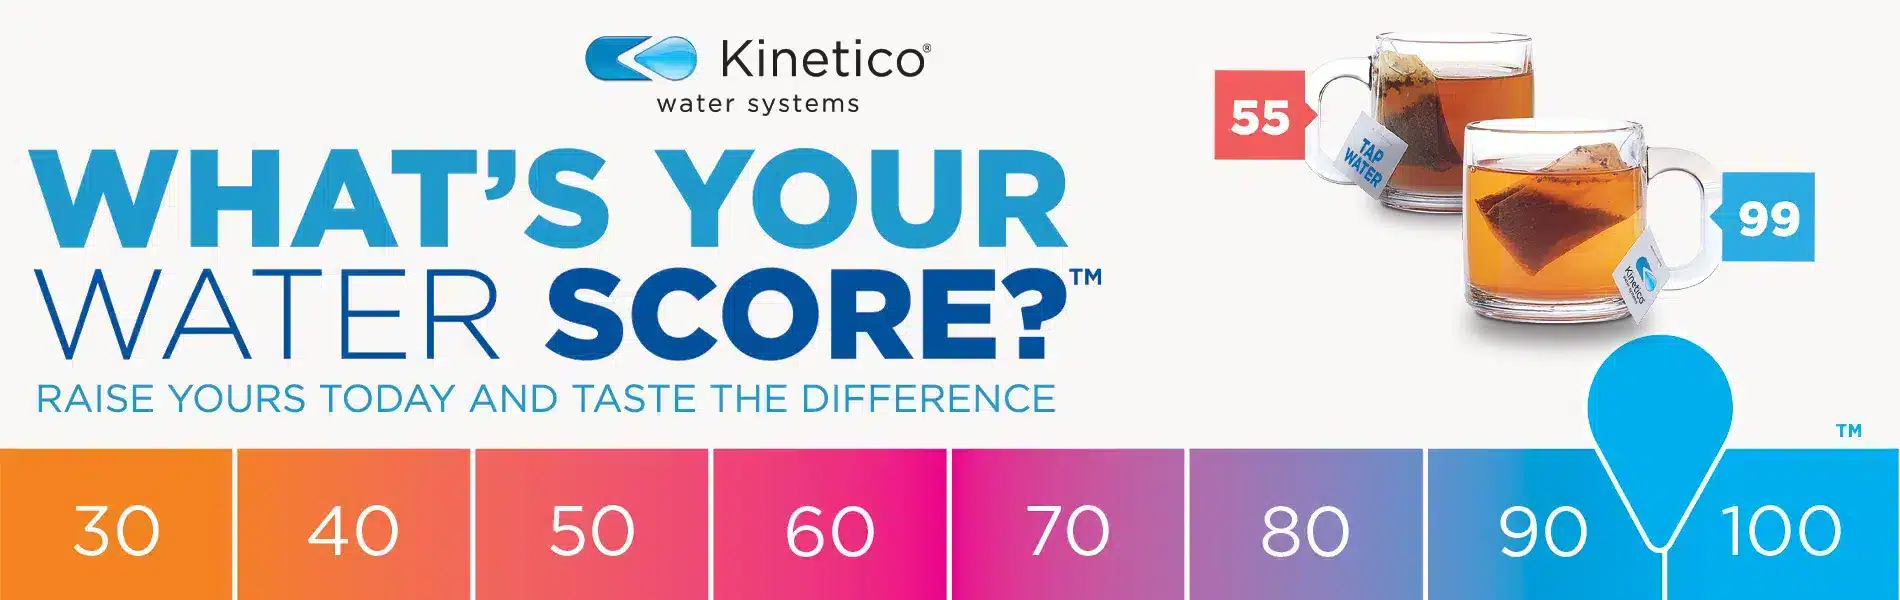 kinetico water score graphic